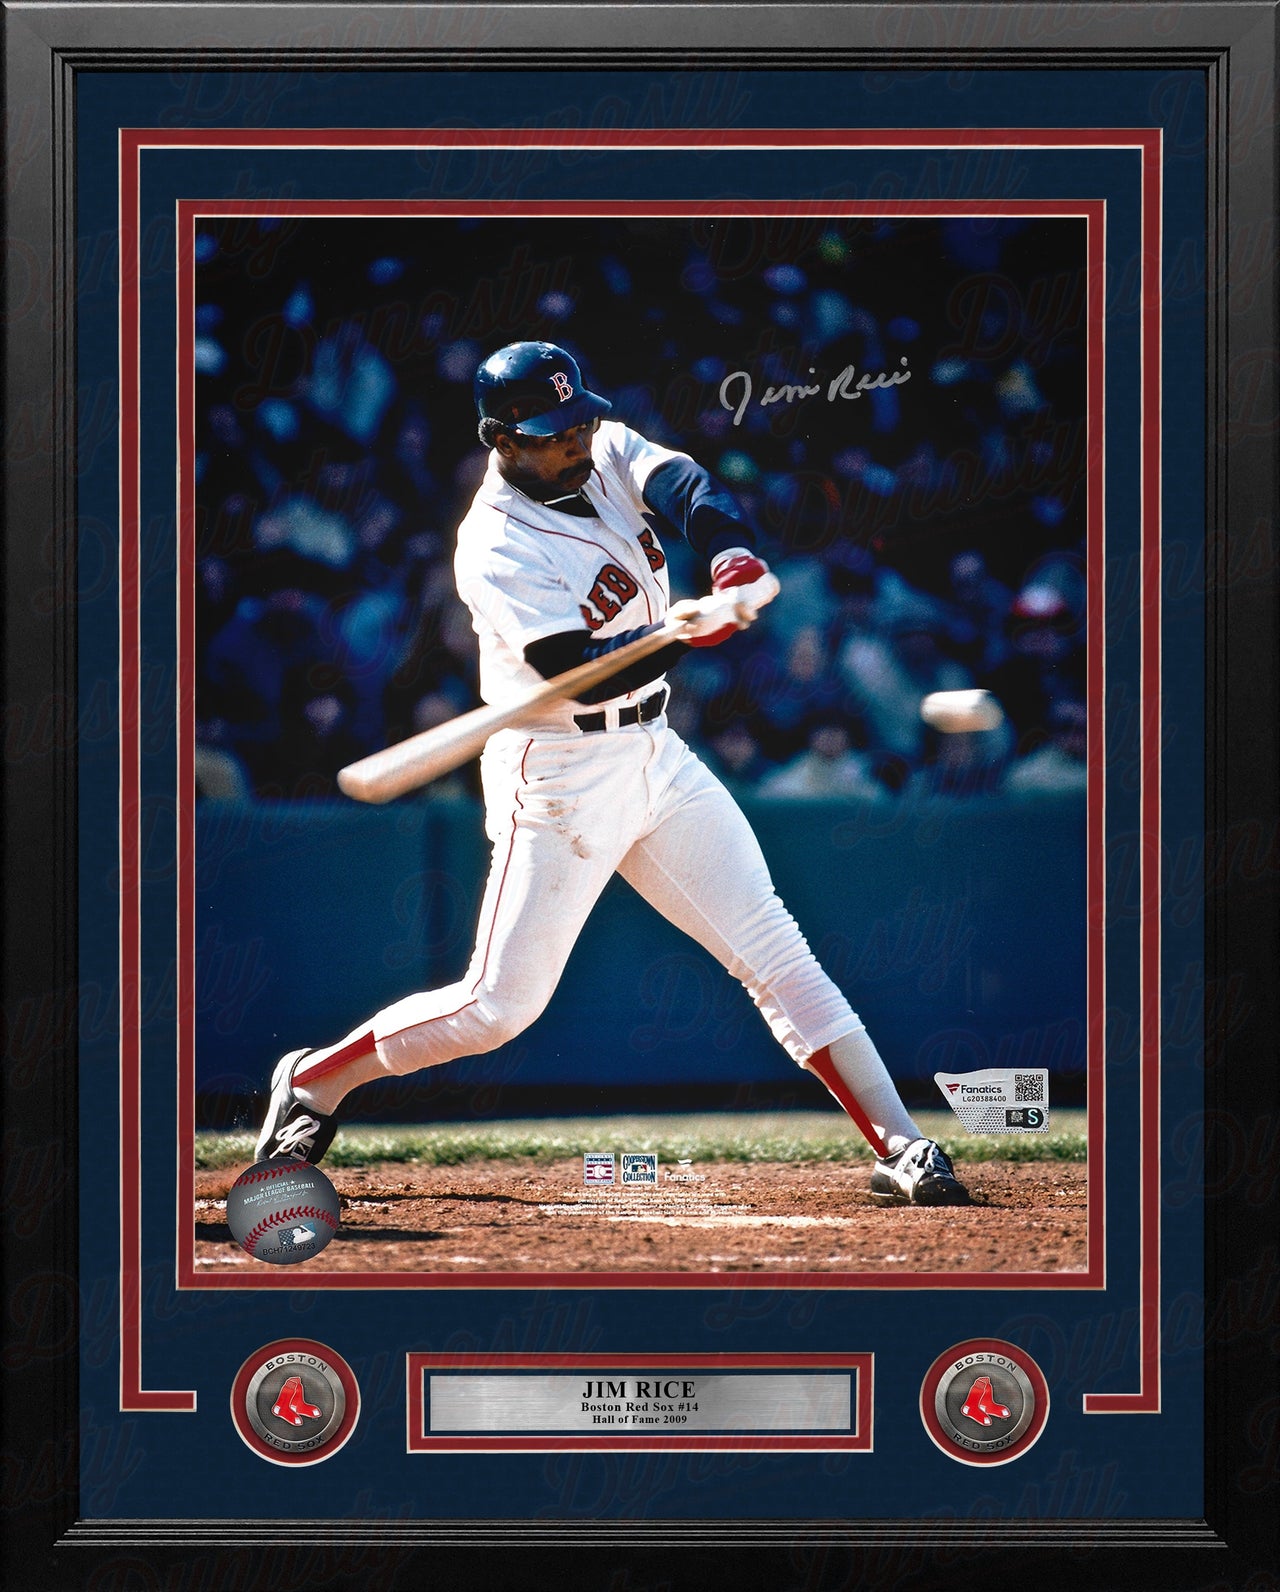 Jim Rice At-Bat Boston Red Sox Autographed 16" x 20" Framed Baseball Photo - Dynasty Sports & Framing 